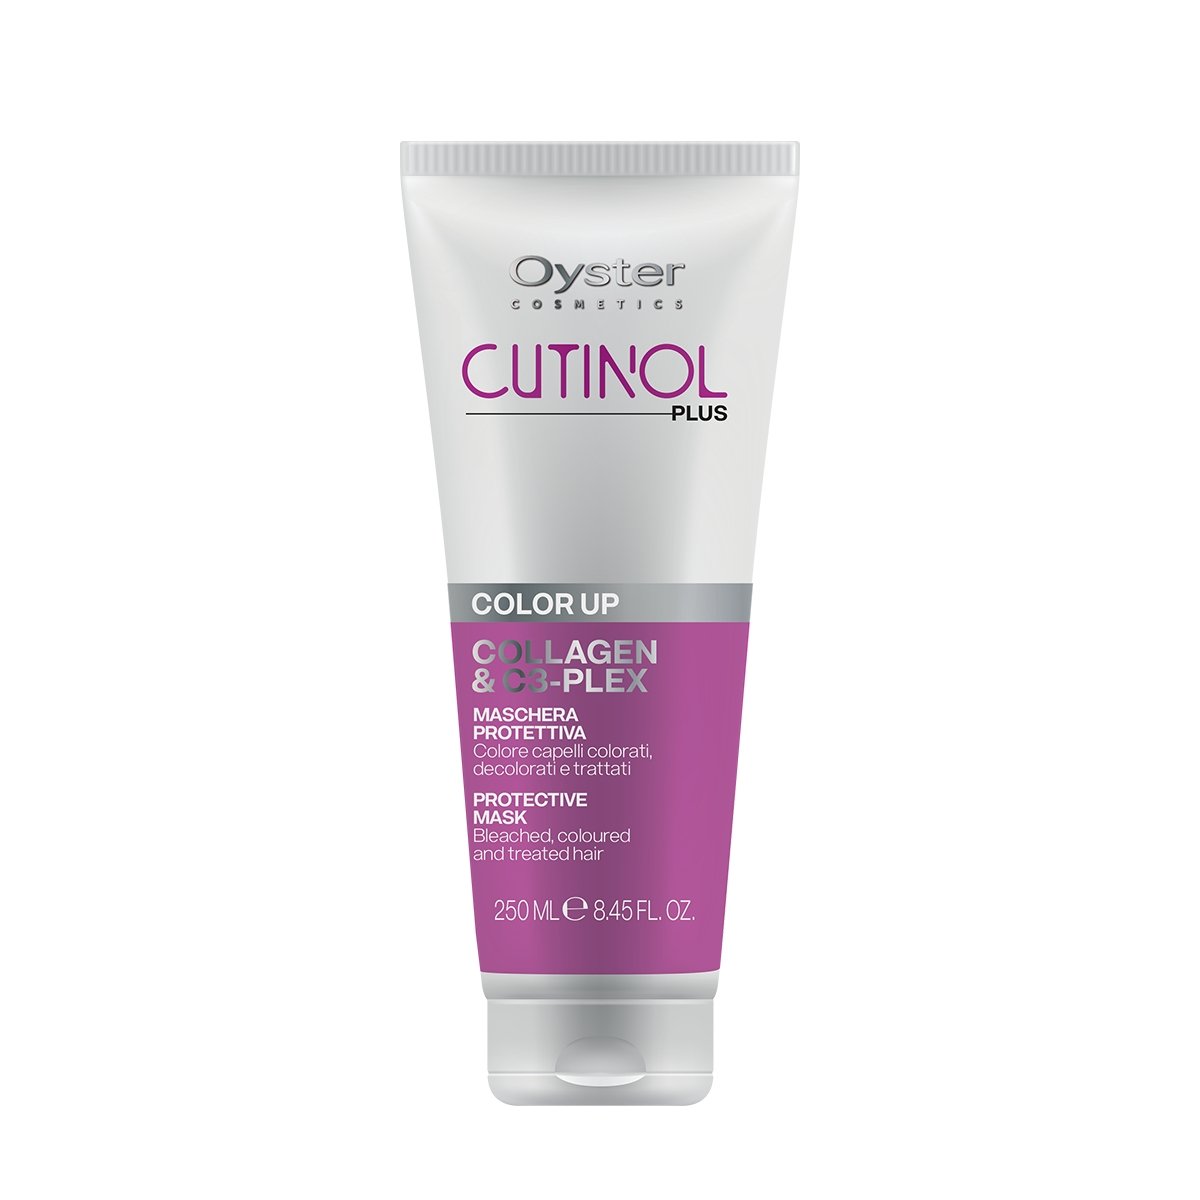 Color Up Protective Mask | Collagen & C3-Plex | 8.45 fl.oz. | Cutinol Plus | OYSTER - SH Salons